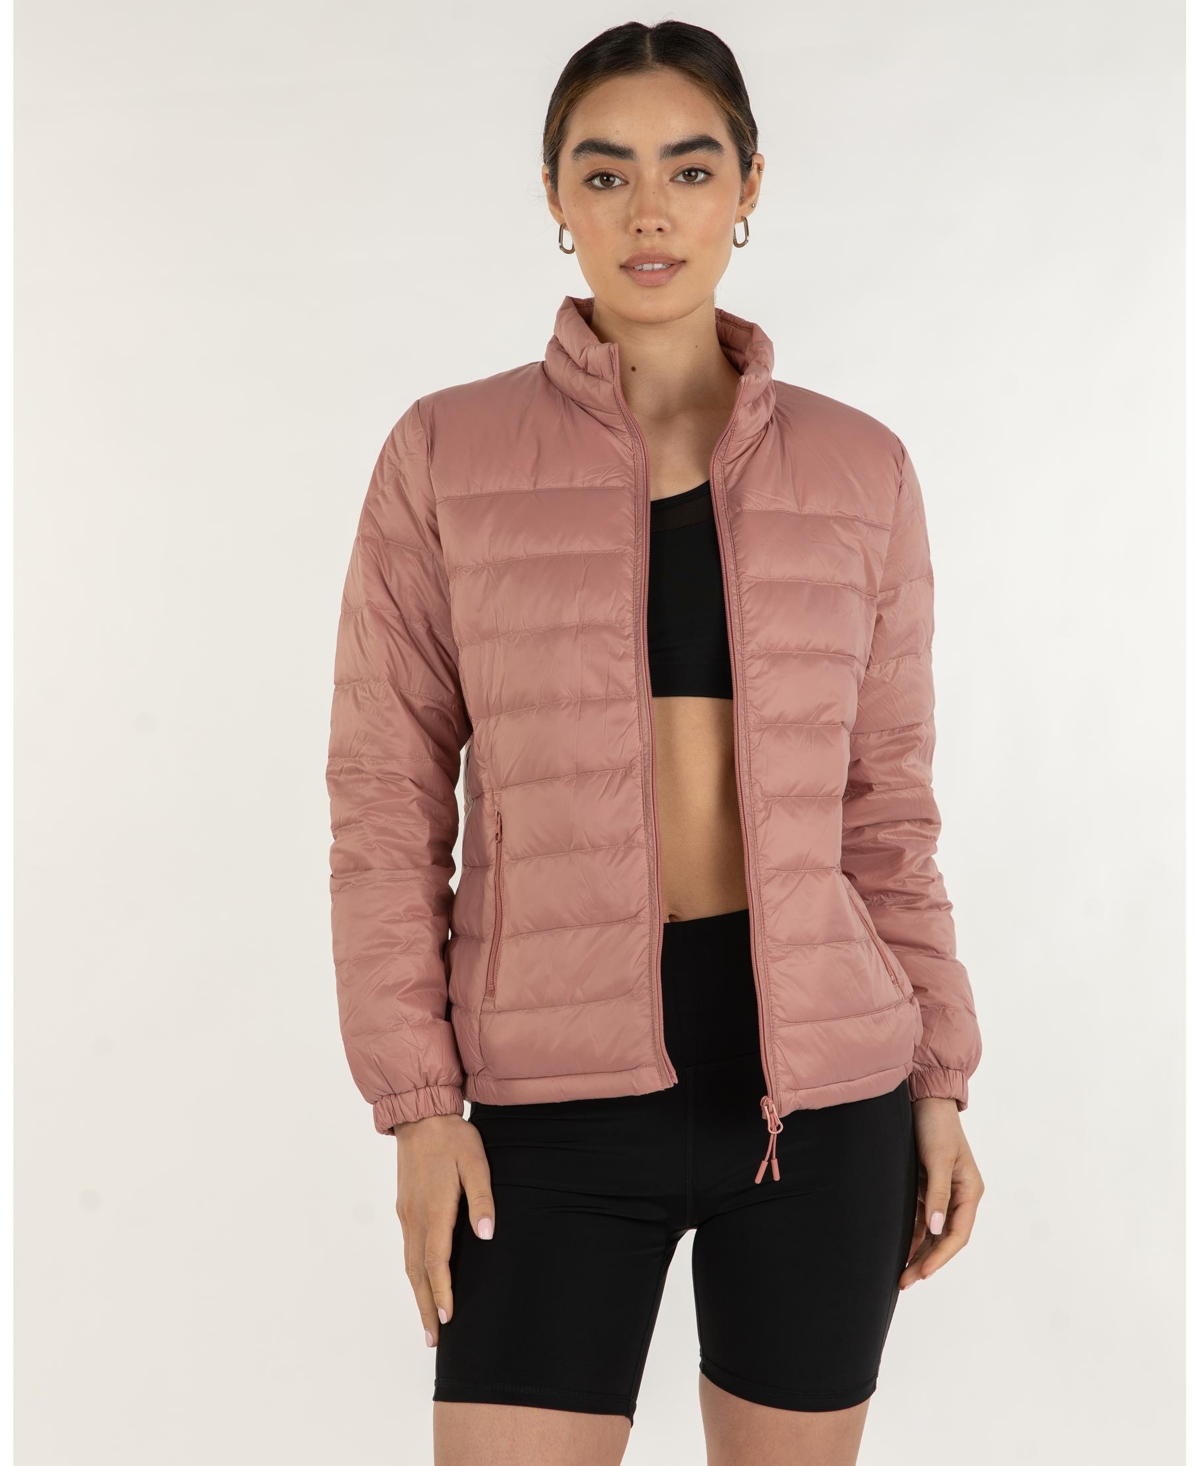 Urbaneer Down Packable Jacket for Women - Pink Satin